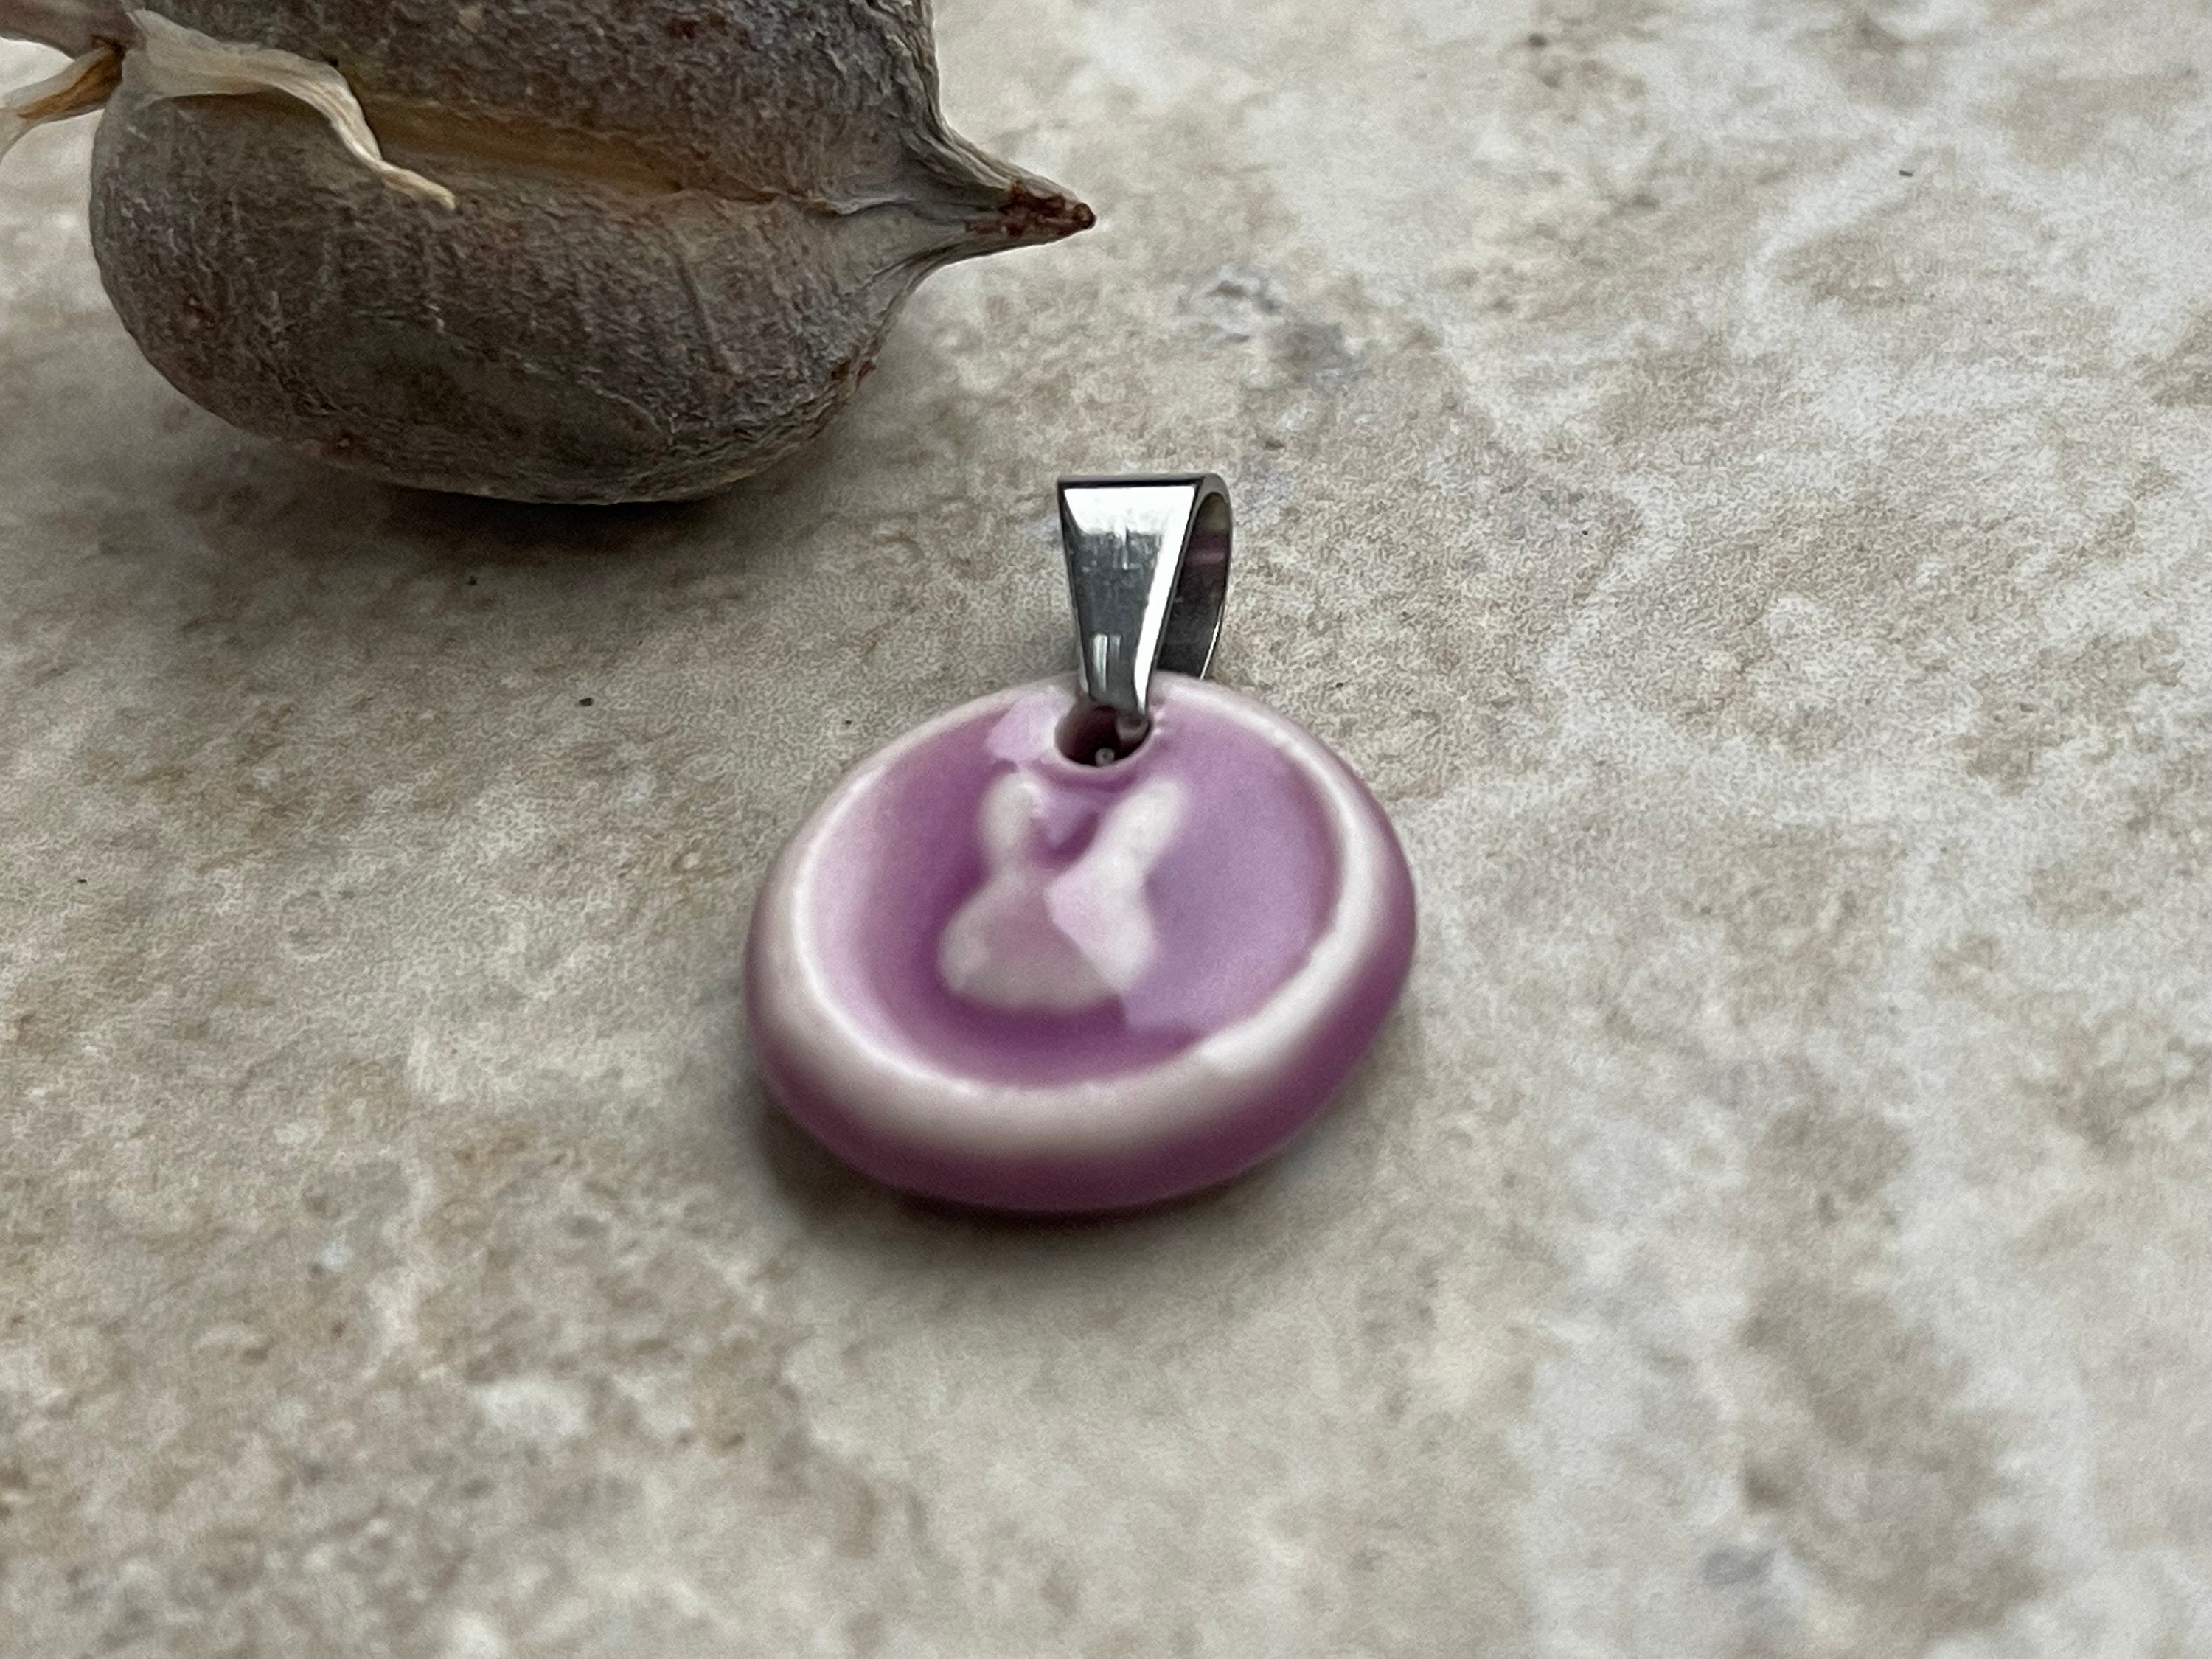 Bunny Circle Pendant, Purple Easter Pendant, Porcelain Ceramic Pendant, Violet Coin Pendant, Jewelry Making Components